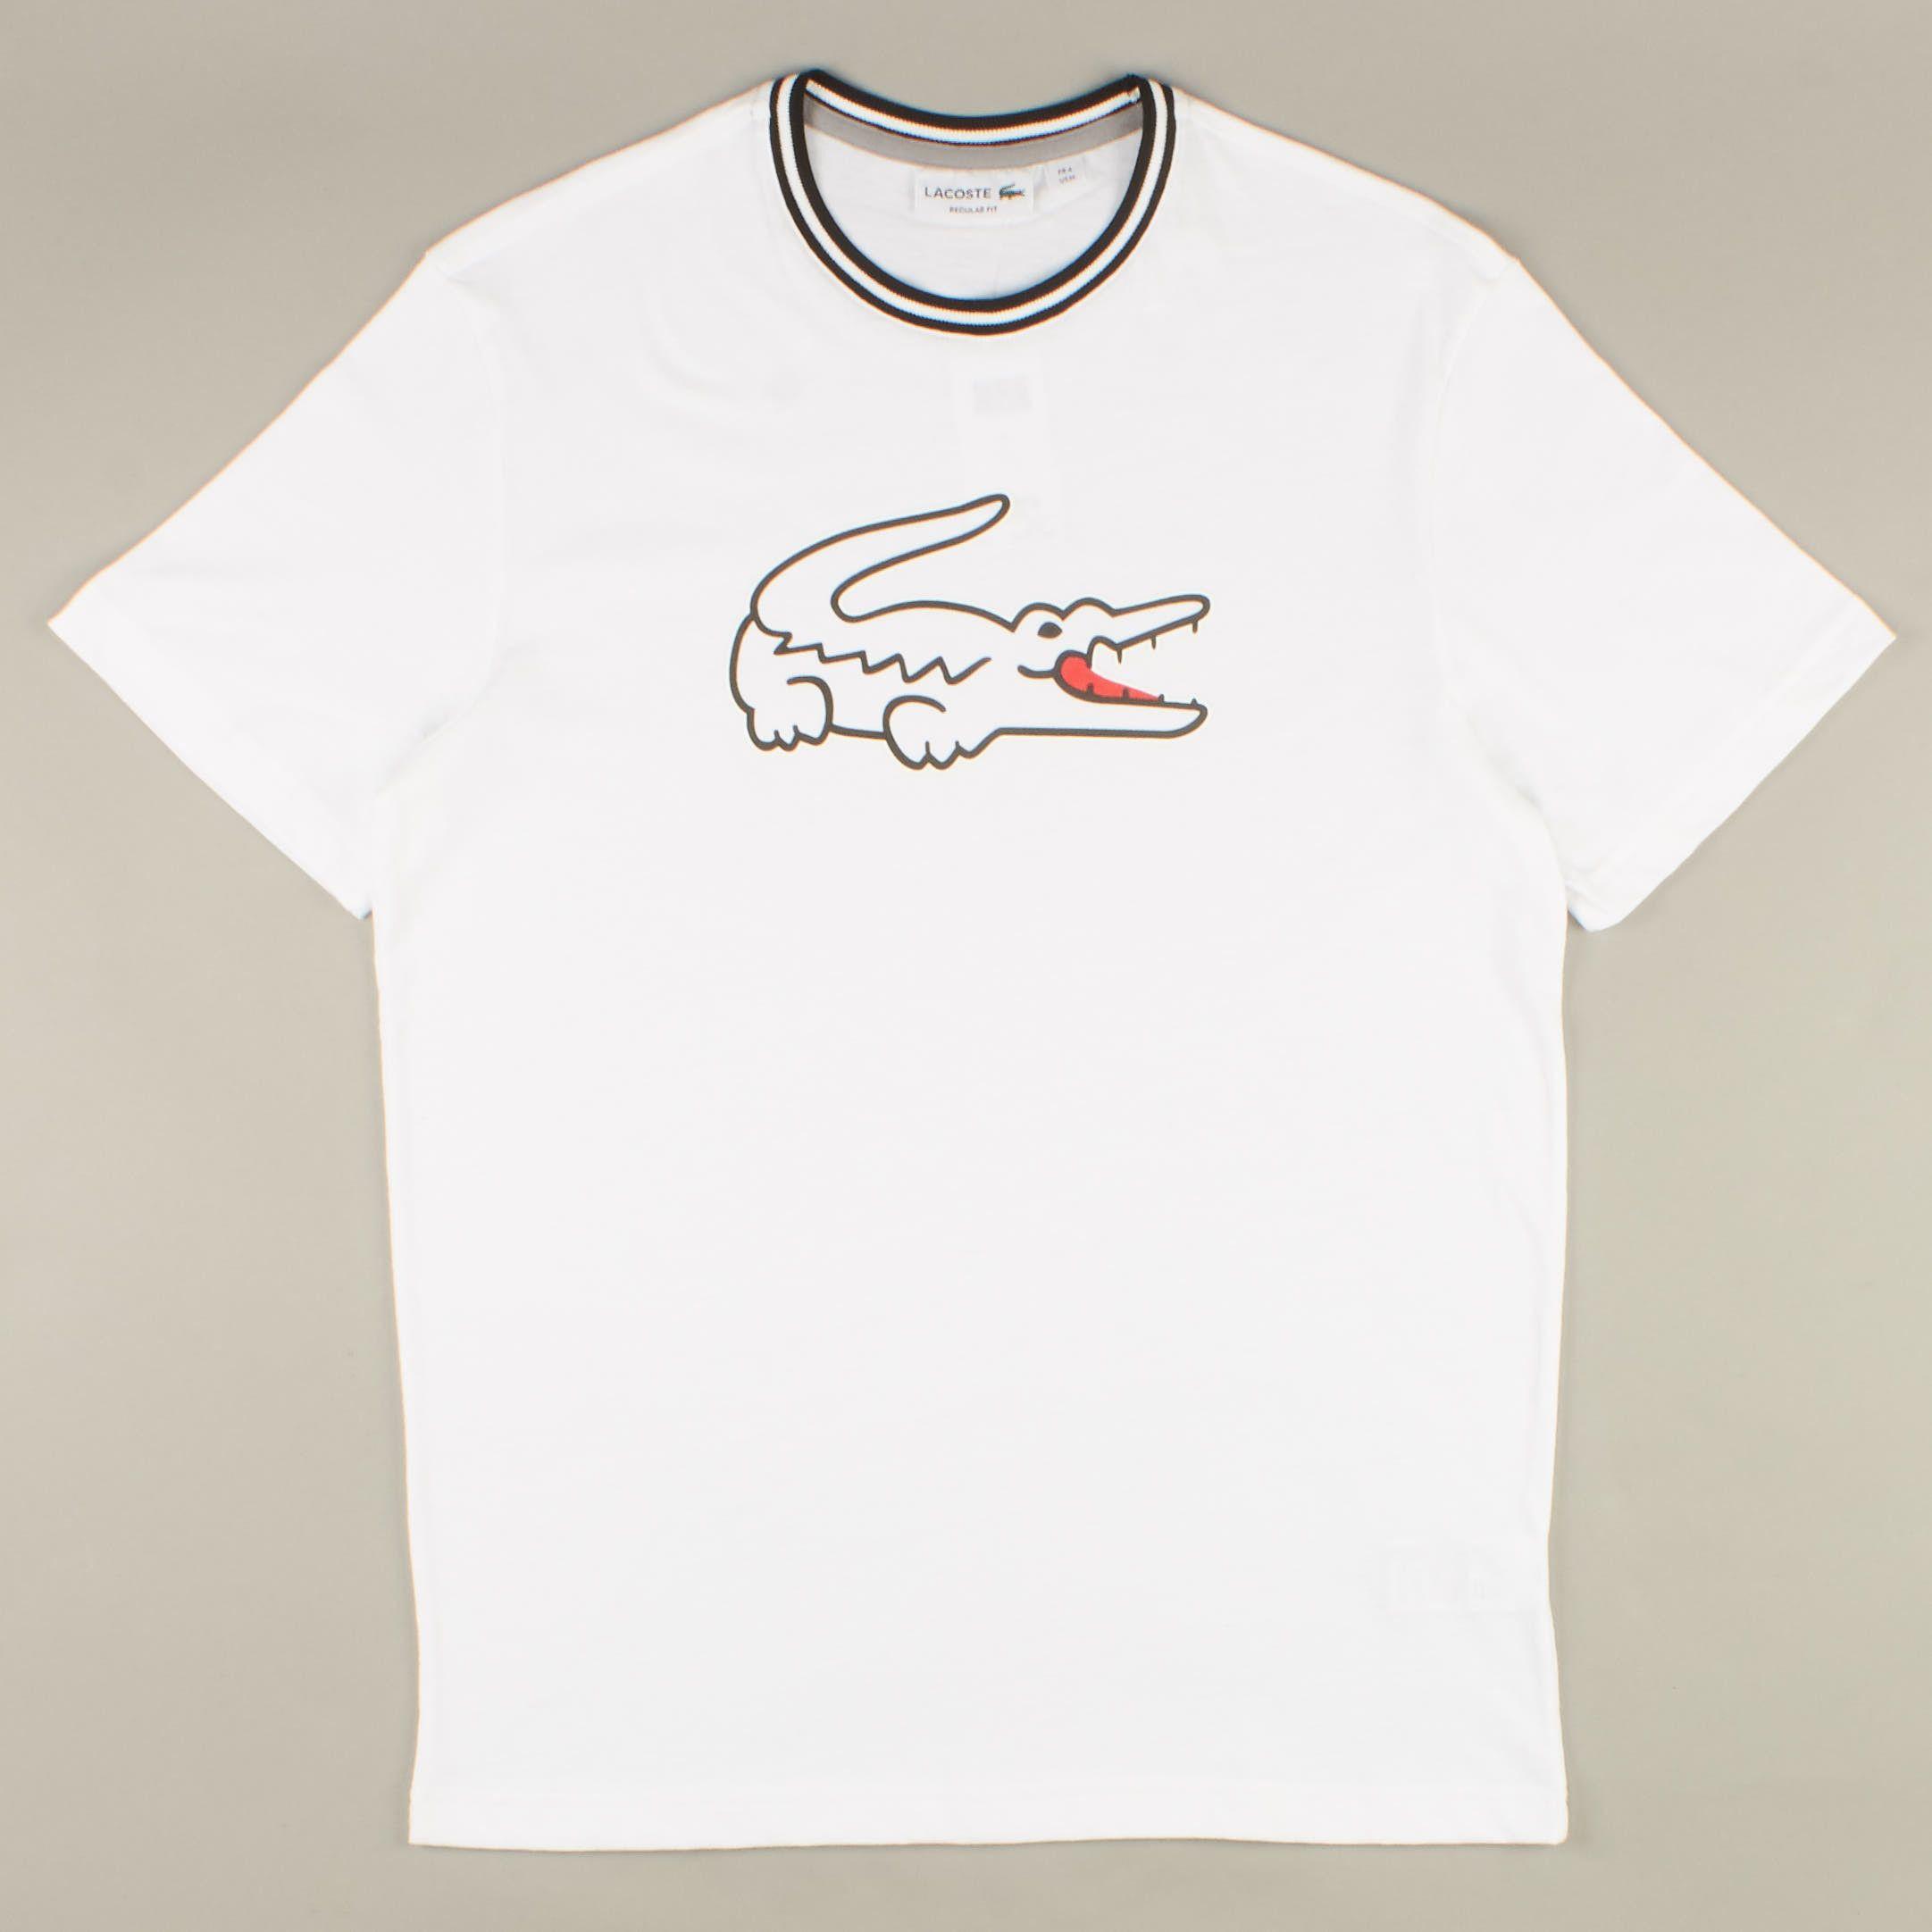 Lacoste Shirt Logo - LogoDix